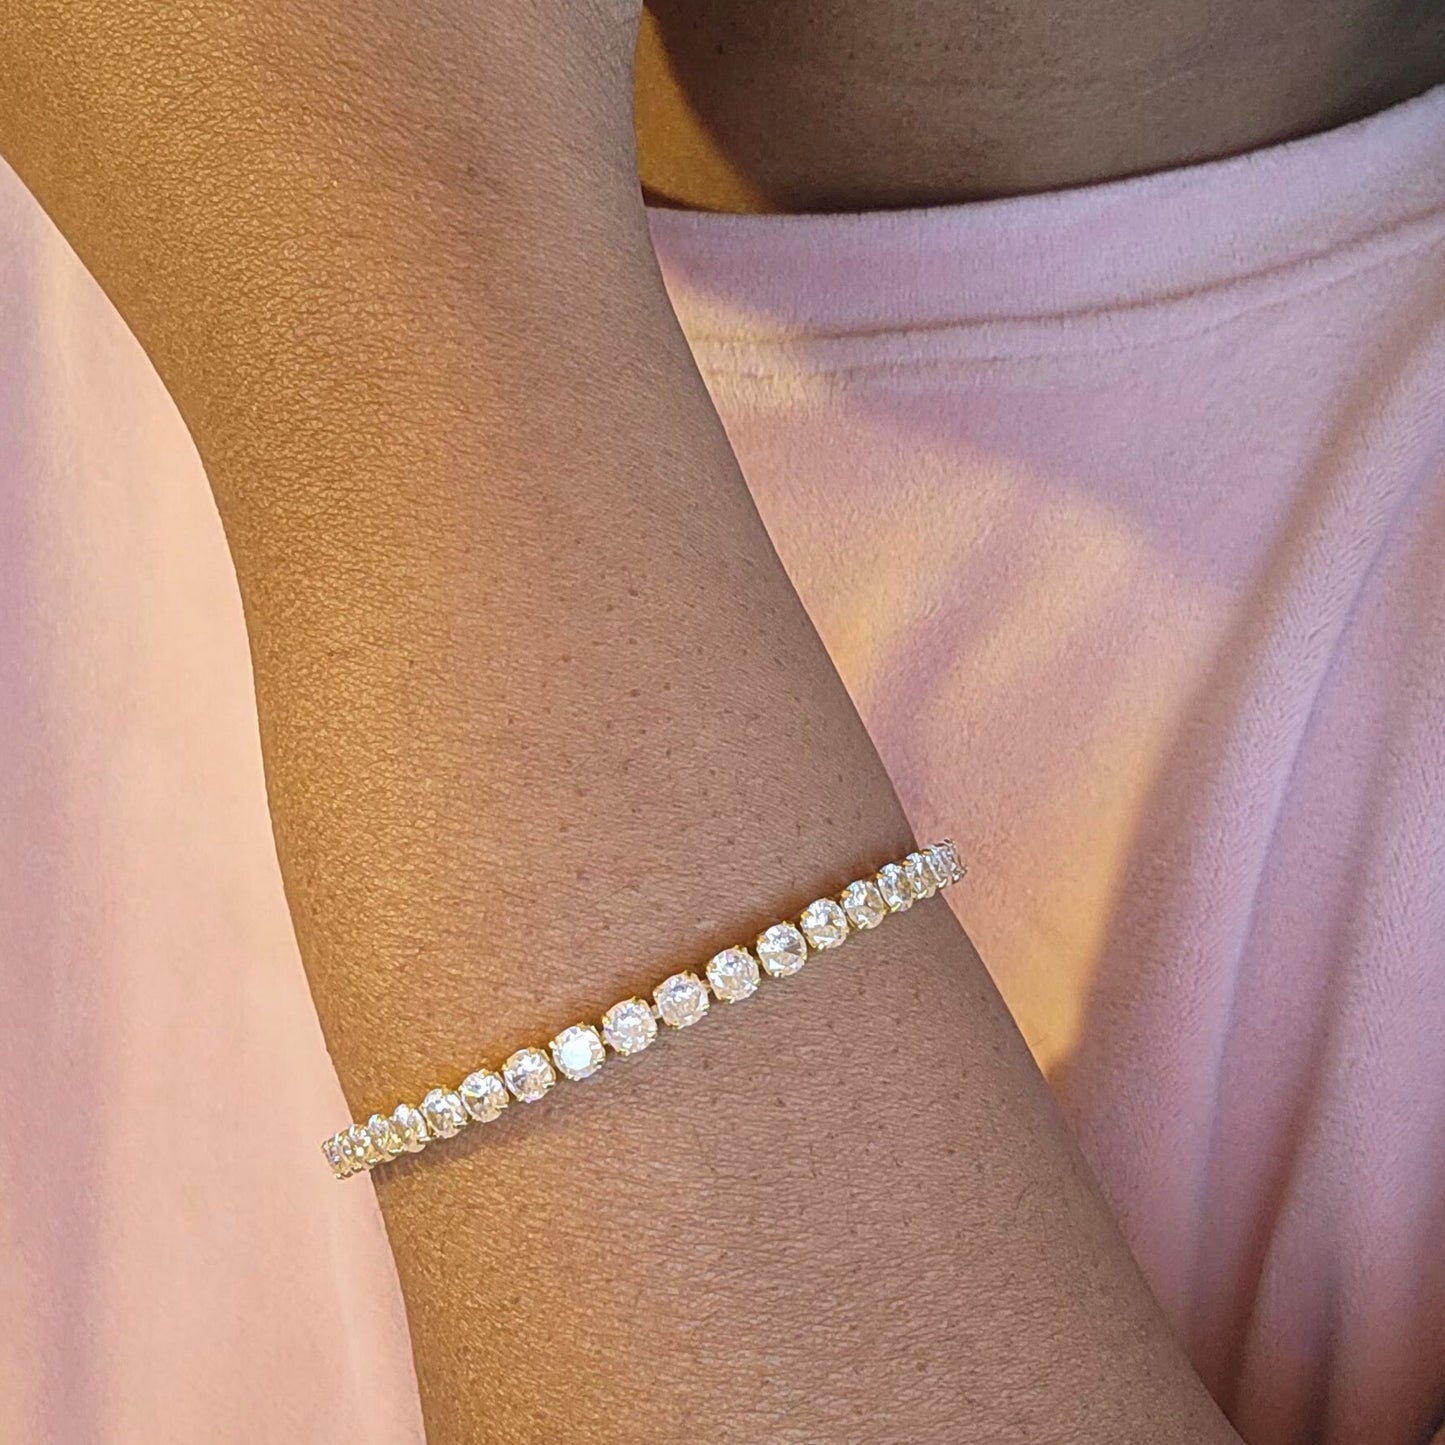 a woman's arm with a cz diamond tennis bracelet on it